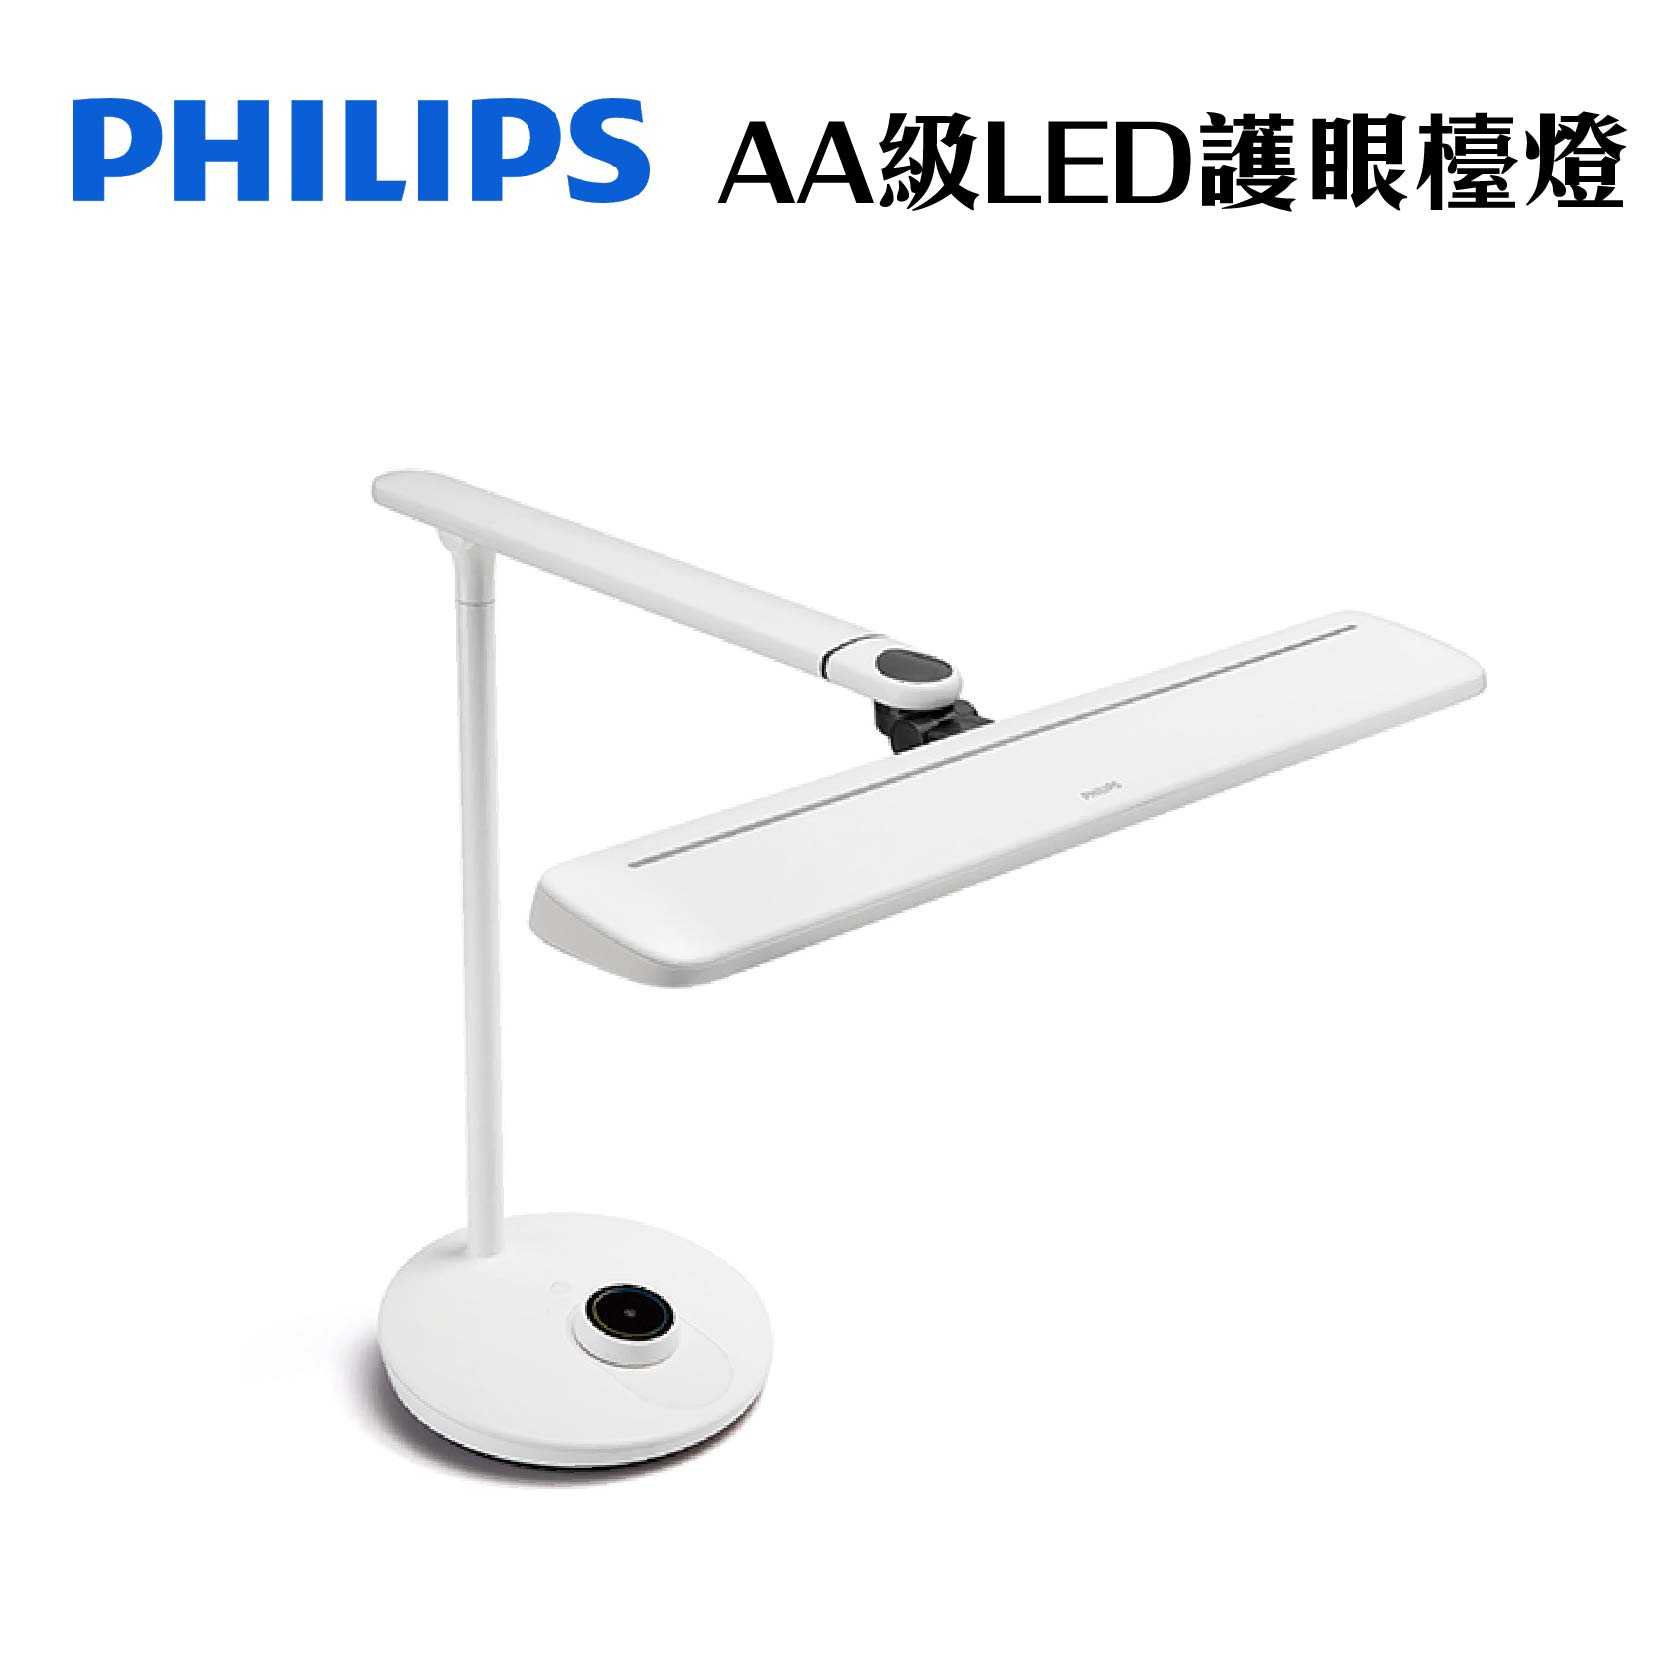 Philips 飛利浦 『軒泰66168 AA級LED護眼檯燈』112顆透鏡 三光源 公司貨 PD002